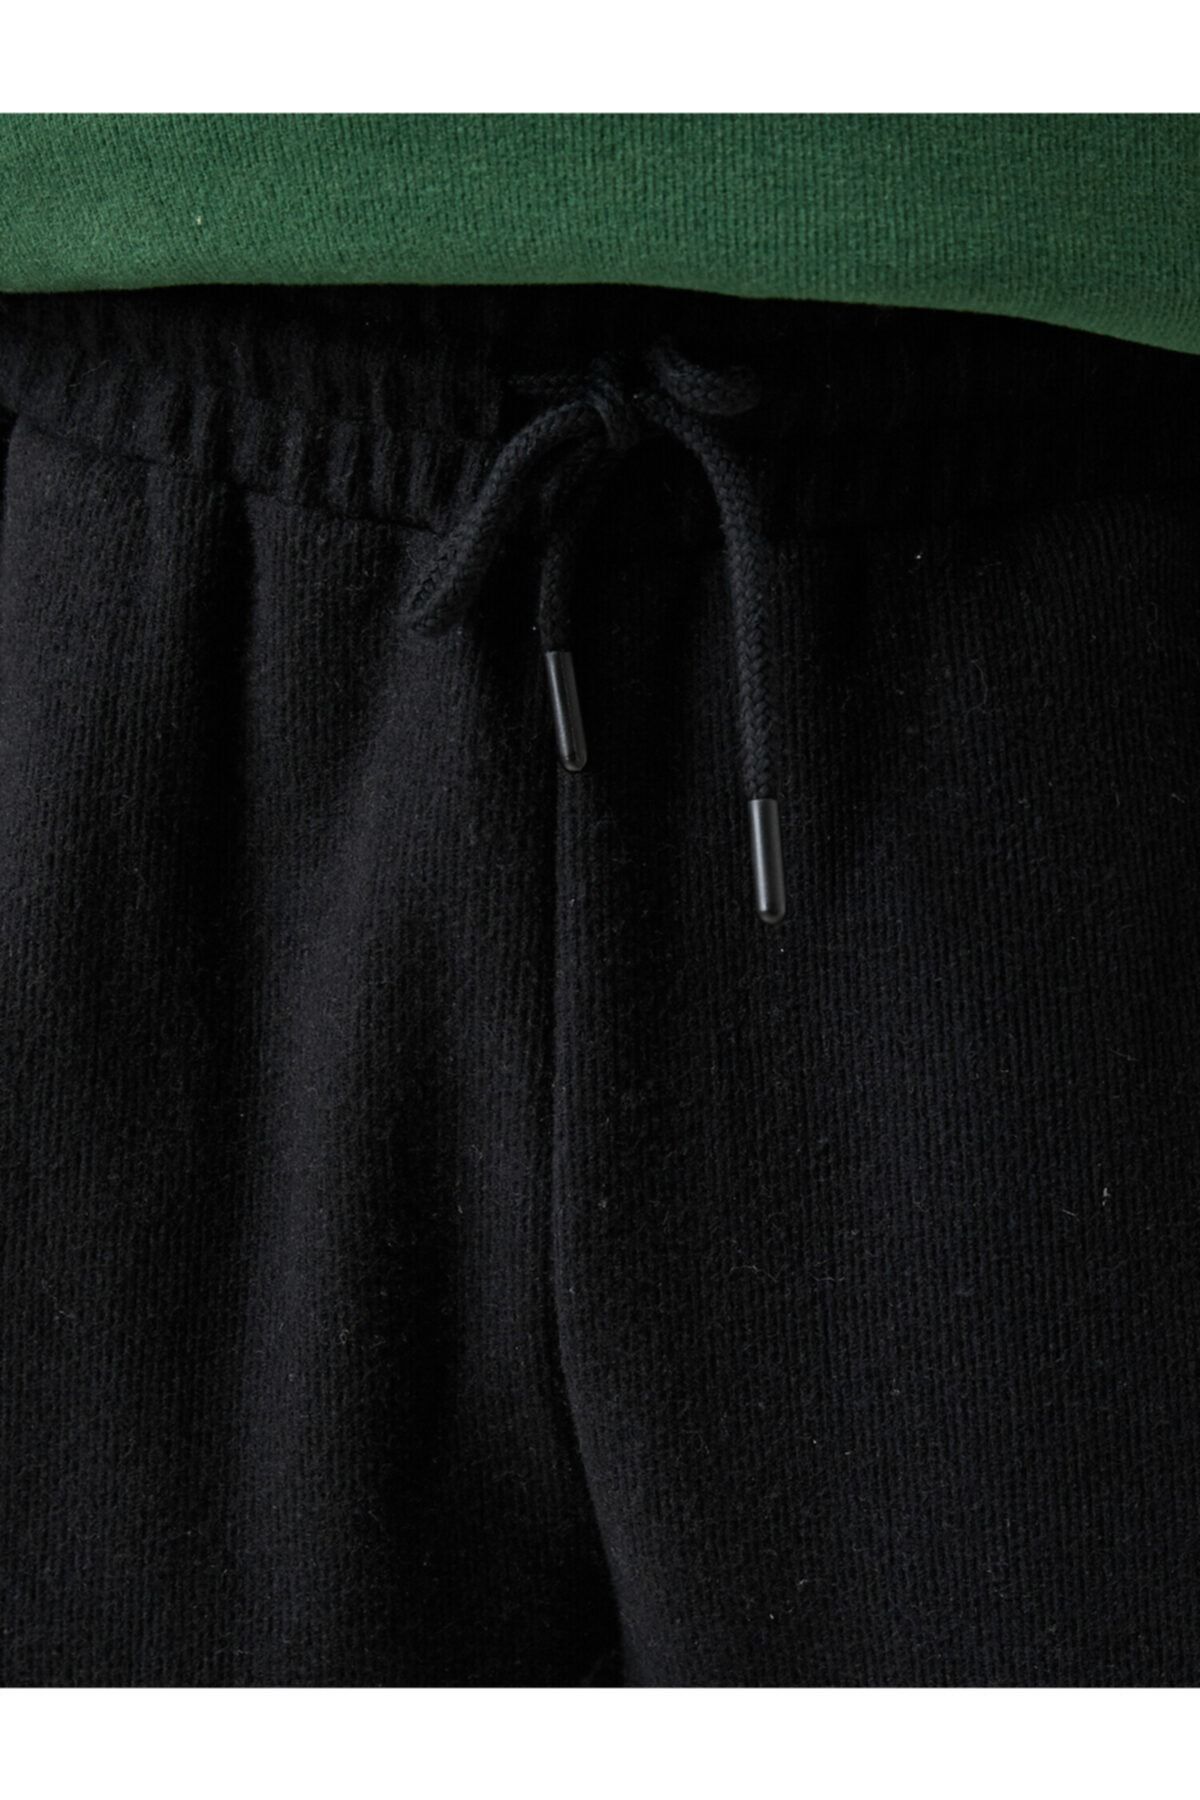 Sweatpants—Black Plain